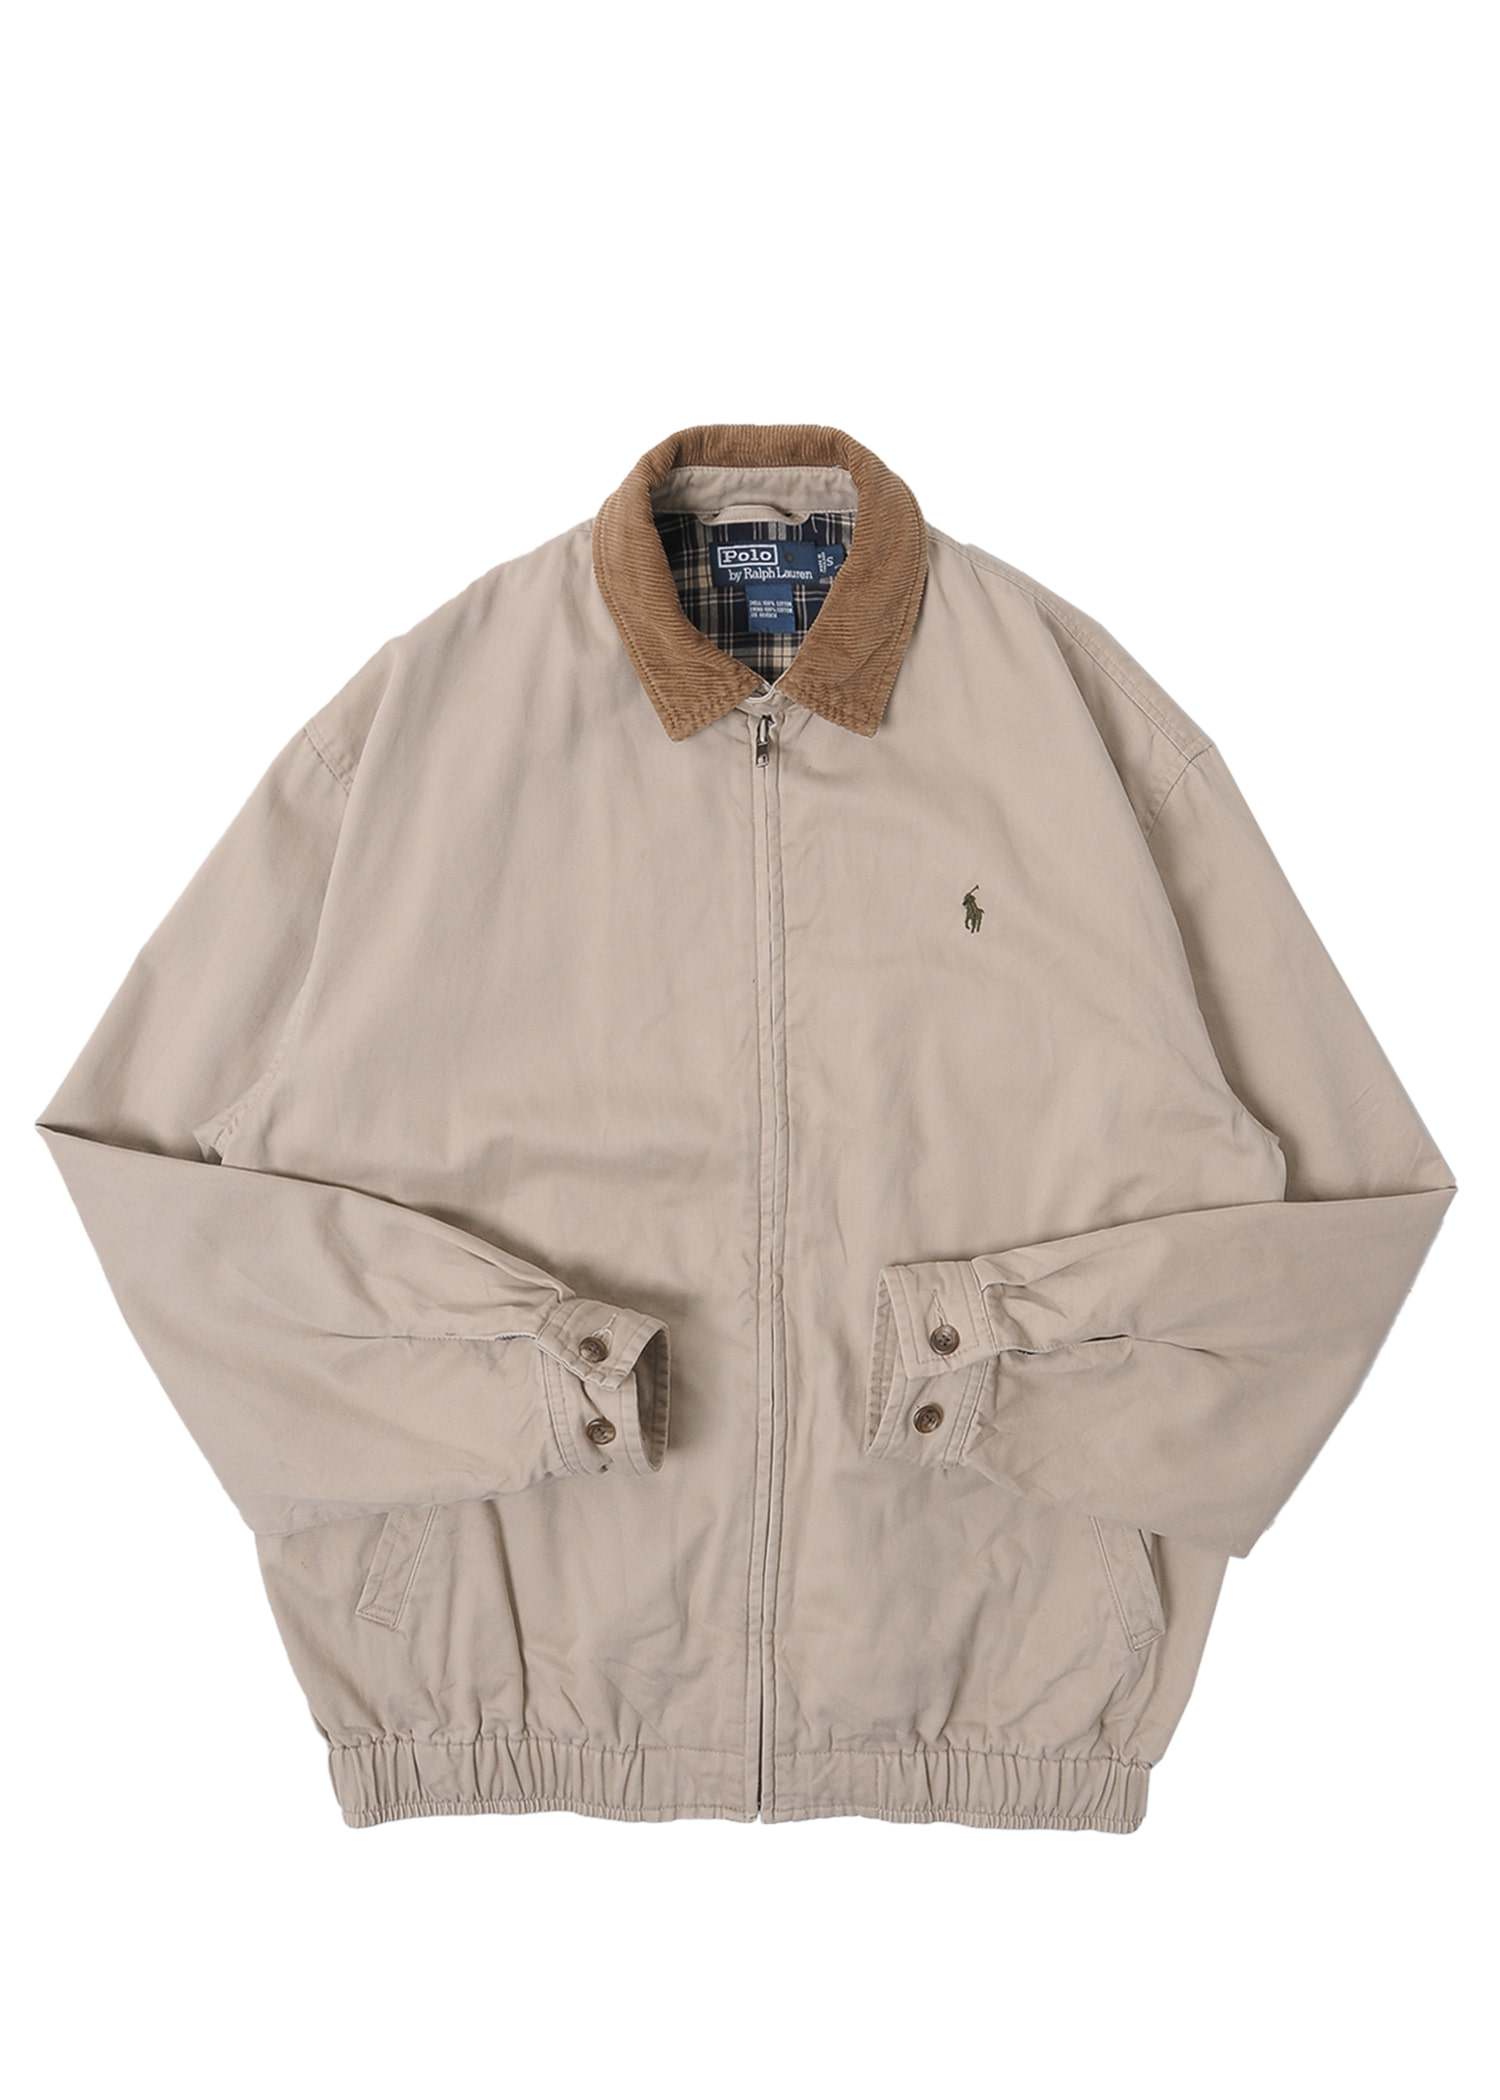 Polo by Ralph Lauren swing-top jacket